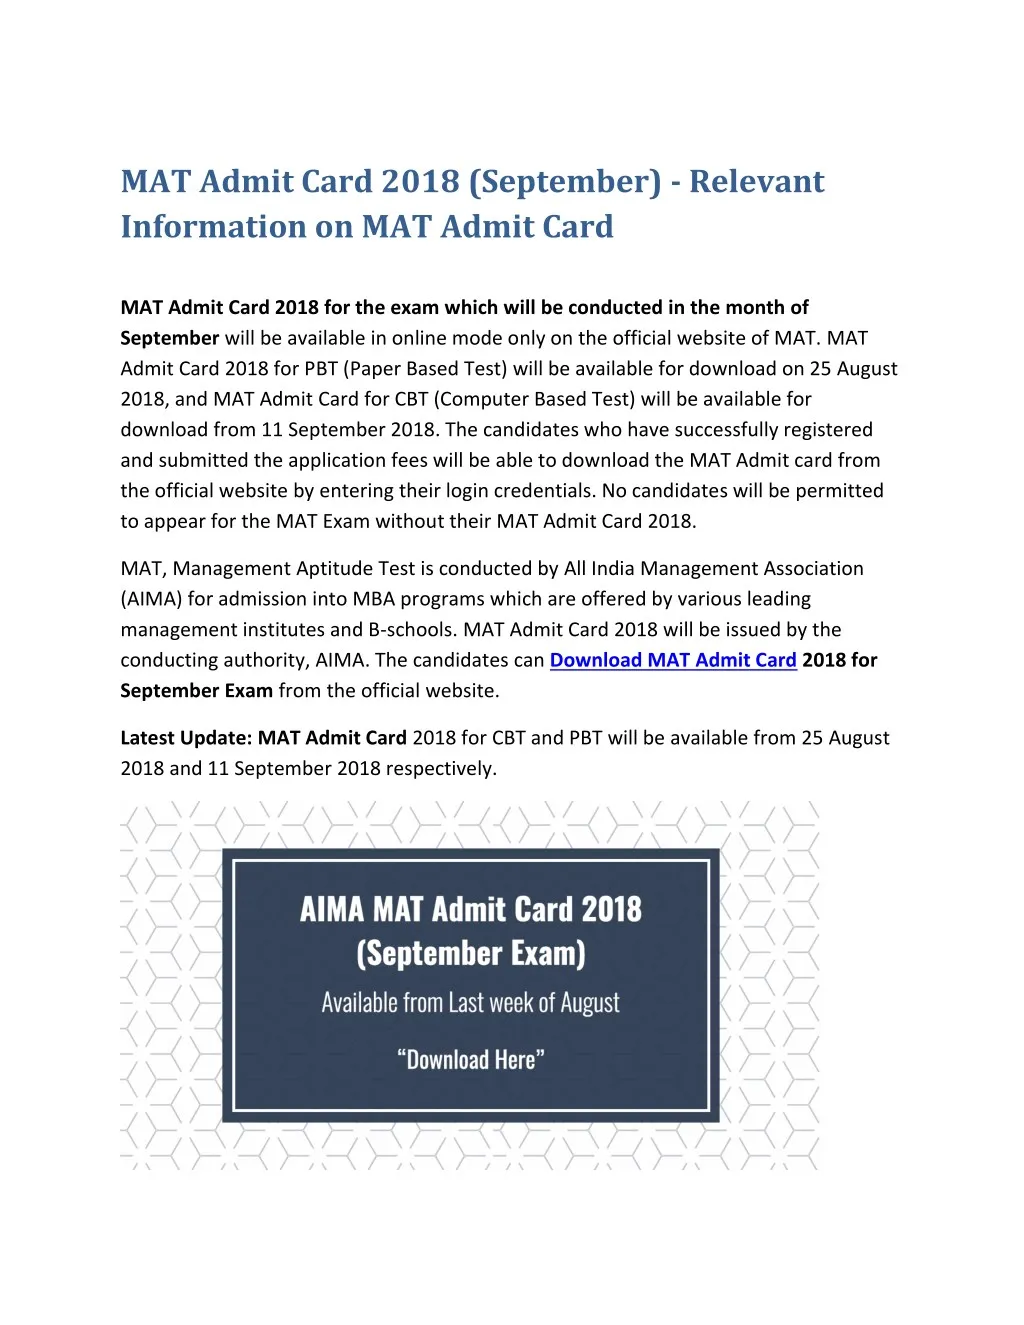 mat admit card 2018 september relevant